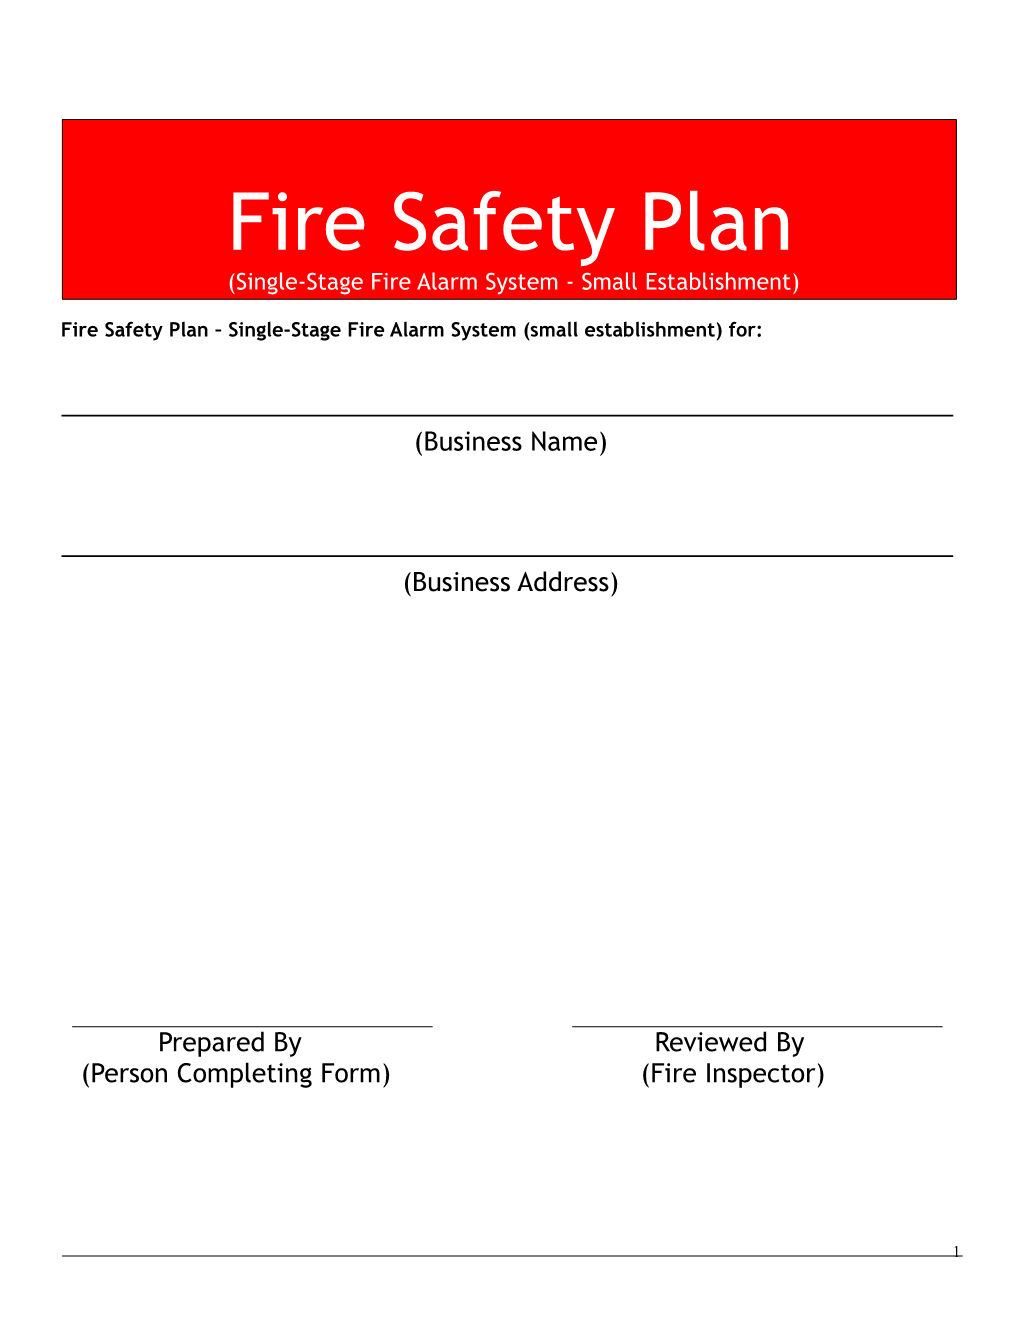 Single-Stage Fire Alarm System - Small Establishment